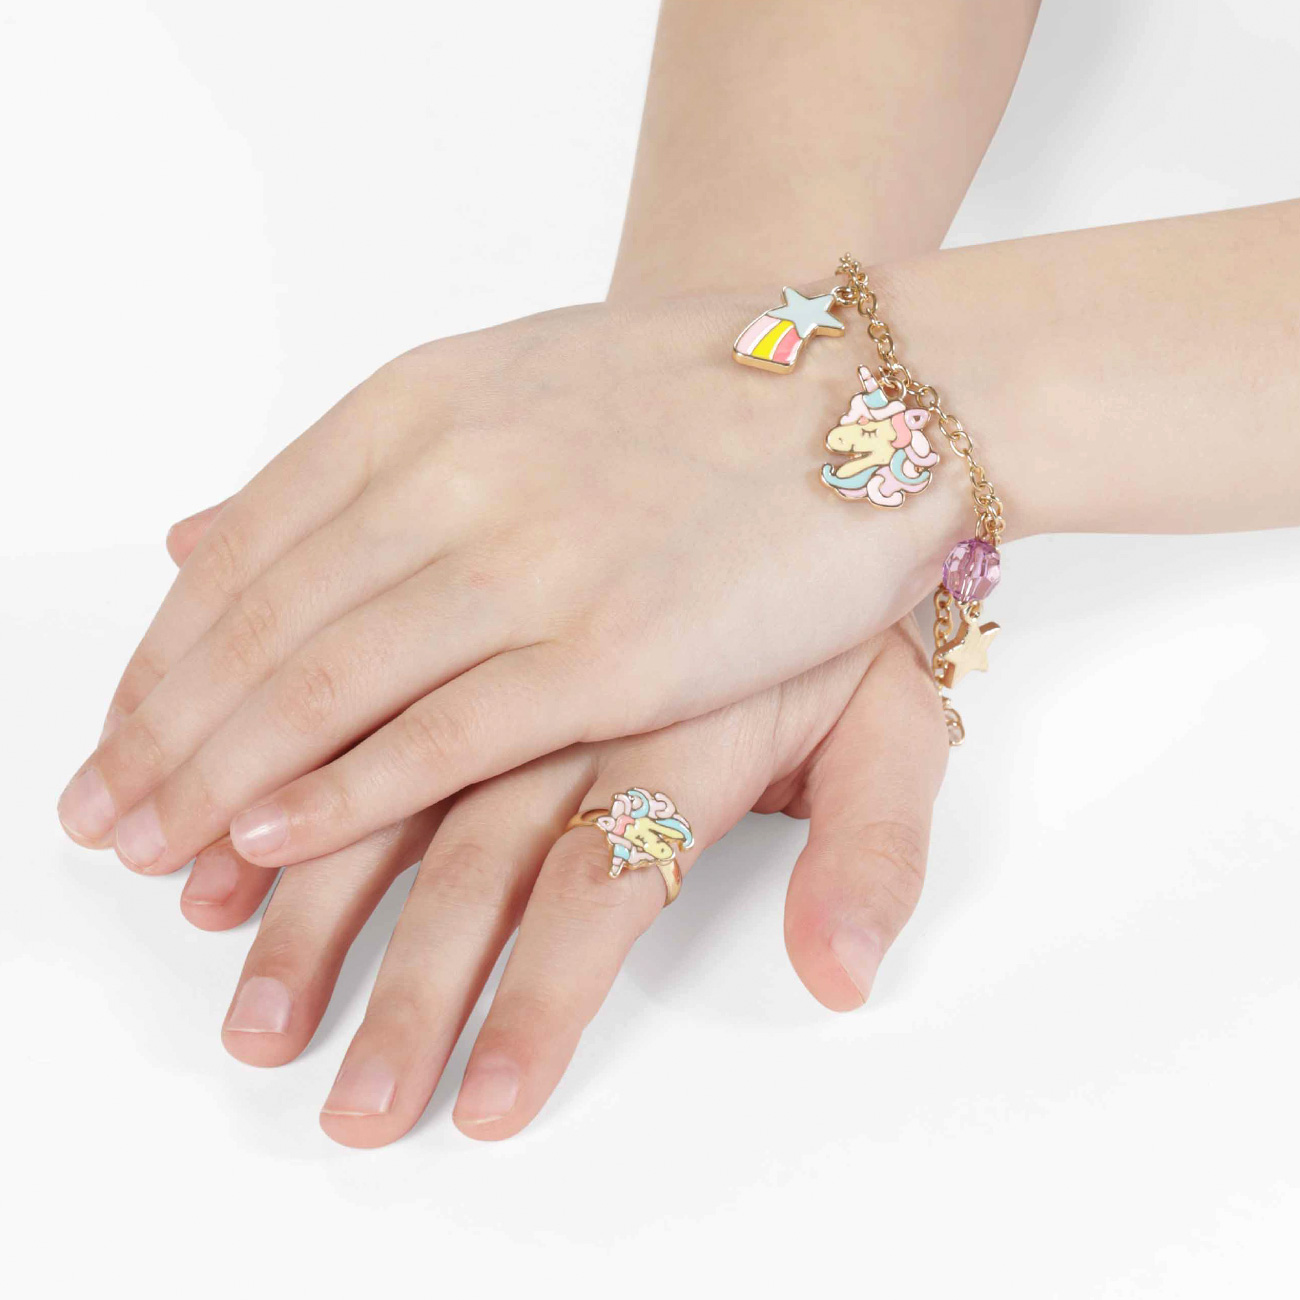 Bracelet, 9 cm, children's, with pendants, metal / plastic, gold, Unicorn / Stars, Unicorn изображение № 3